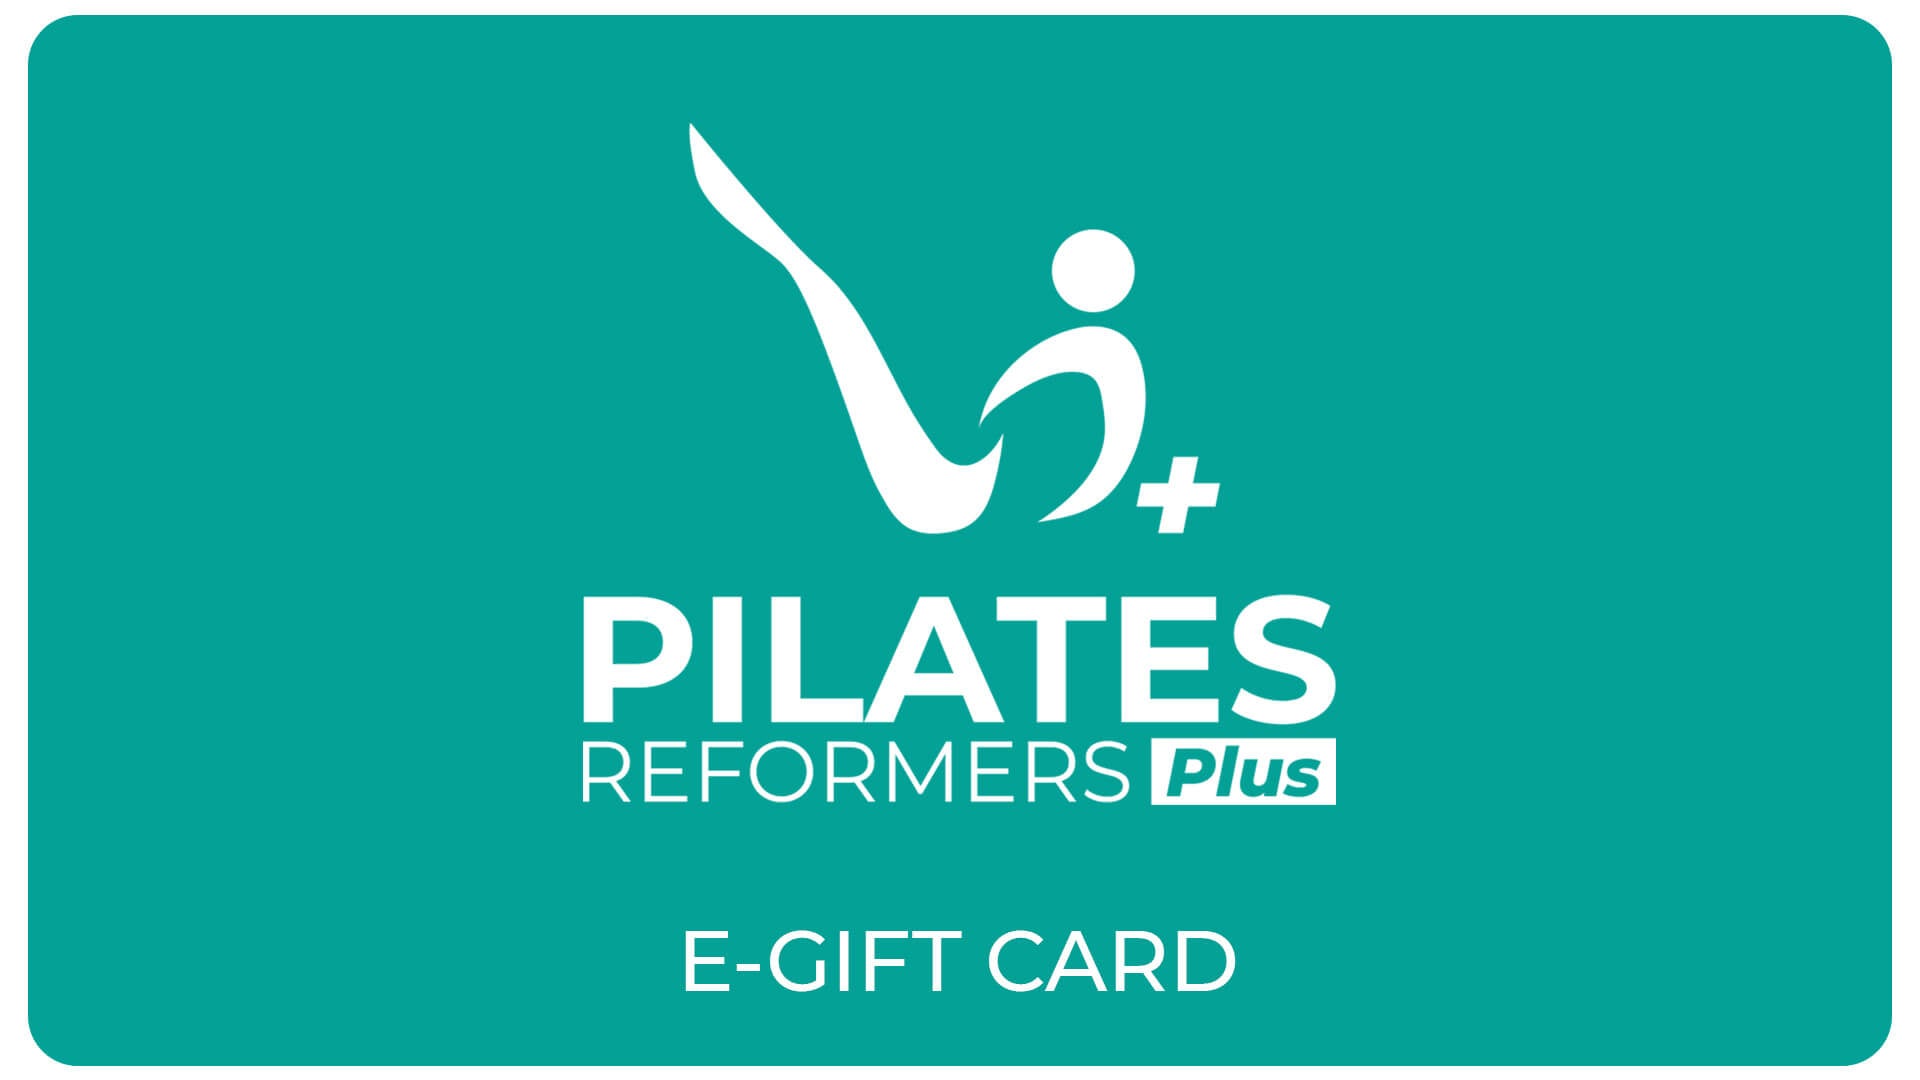 E-Gift Card for Pilates Reformers & Equipment